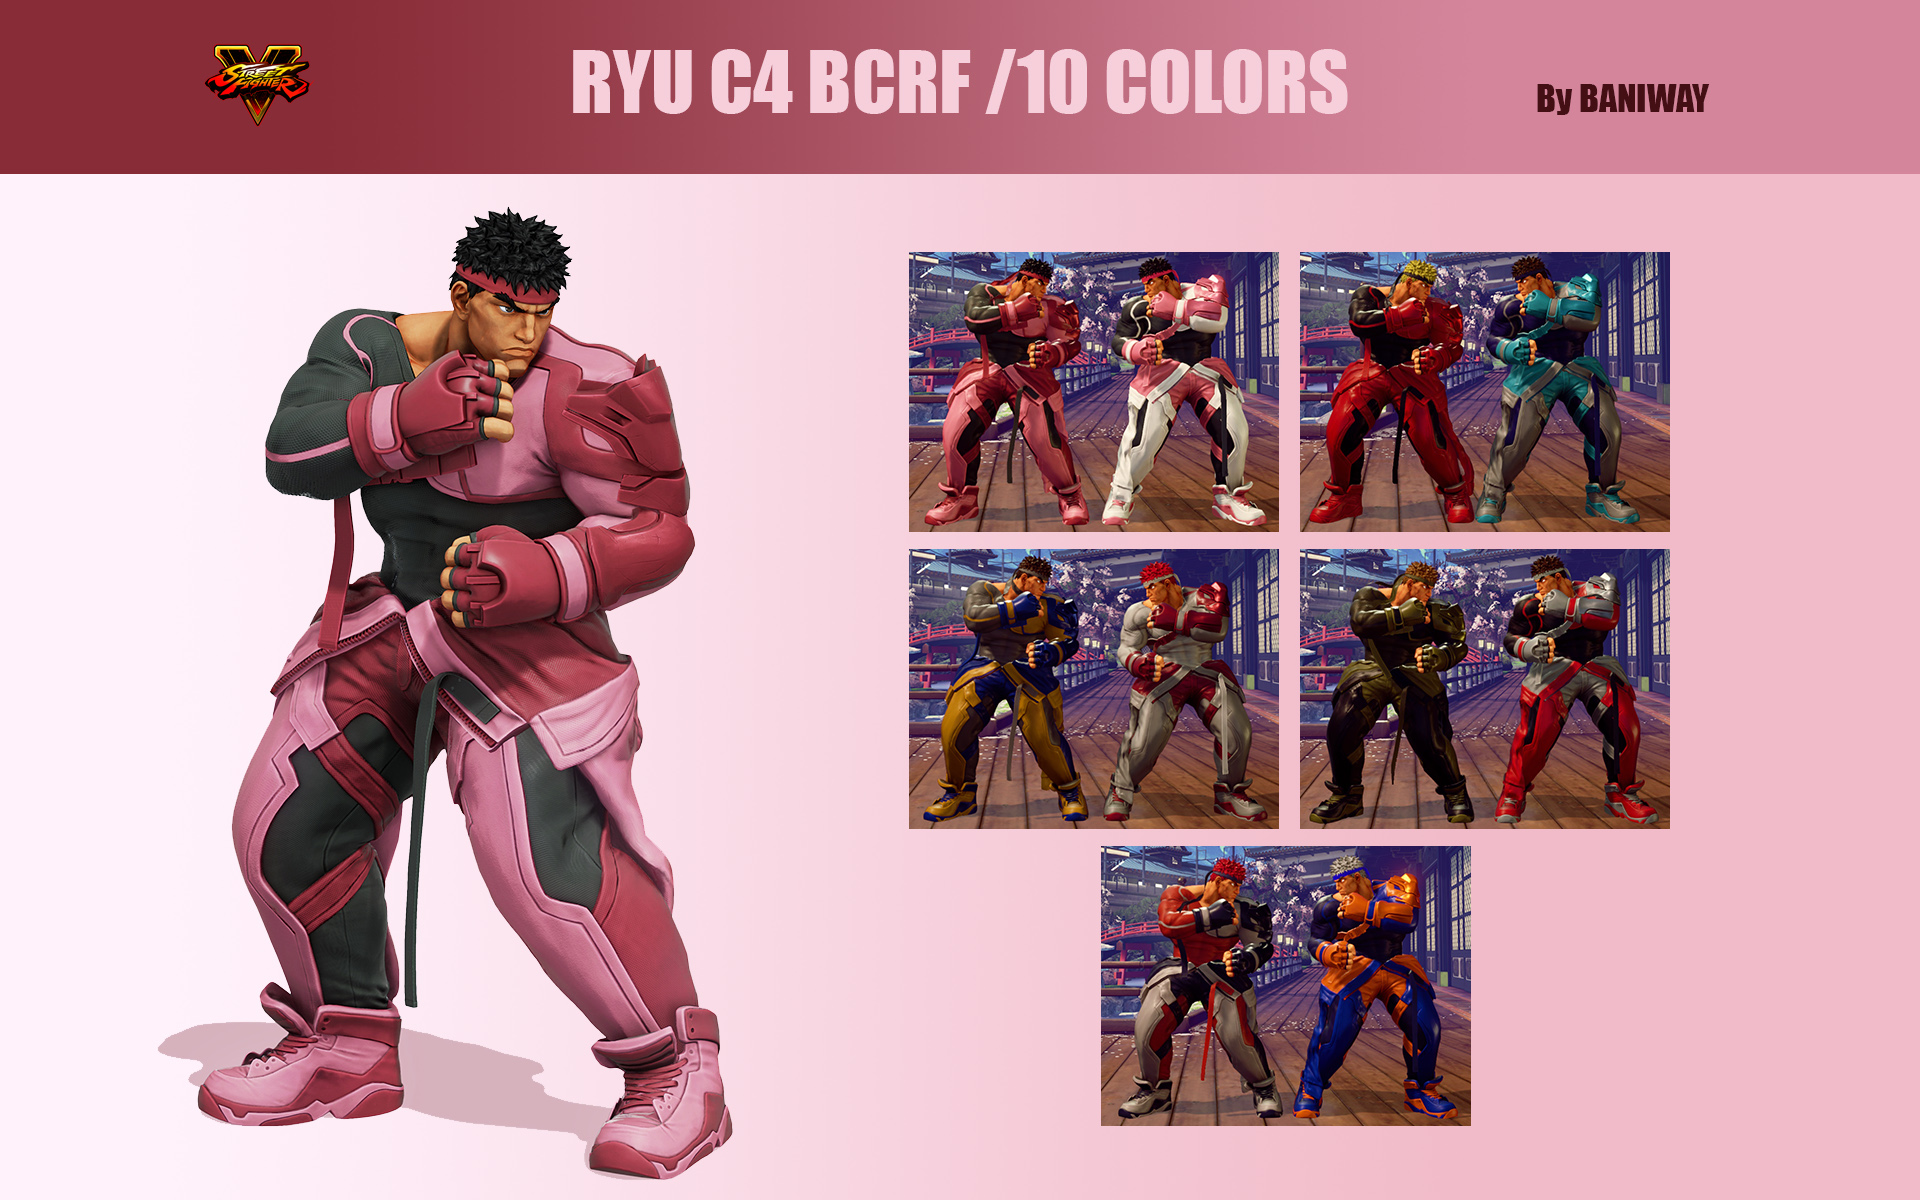 USFIV Street Fighter 1 Ryu by monkeygigabuster on DeviantArt